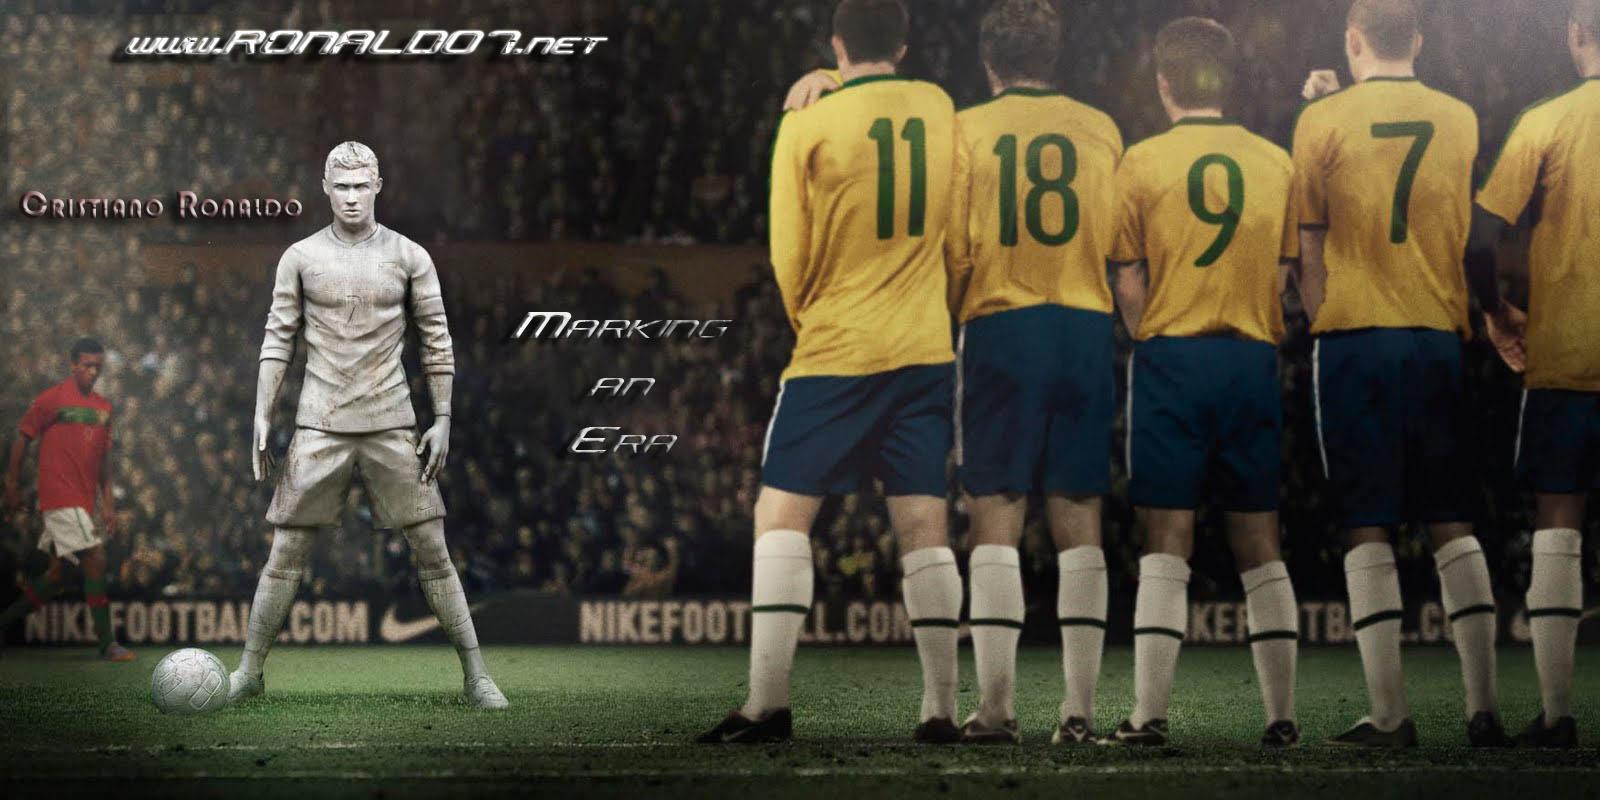 wallpaperCristiano Ronaldo. Semua Tentang Bola